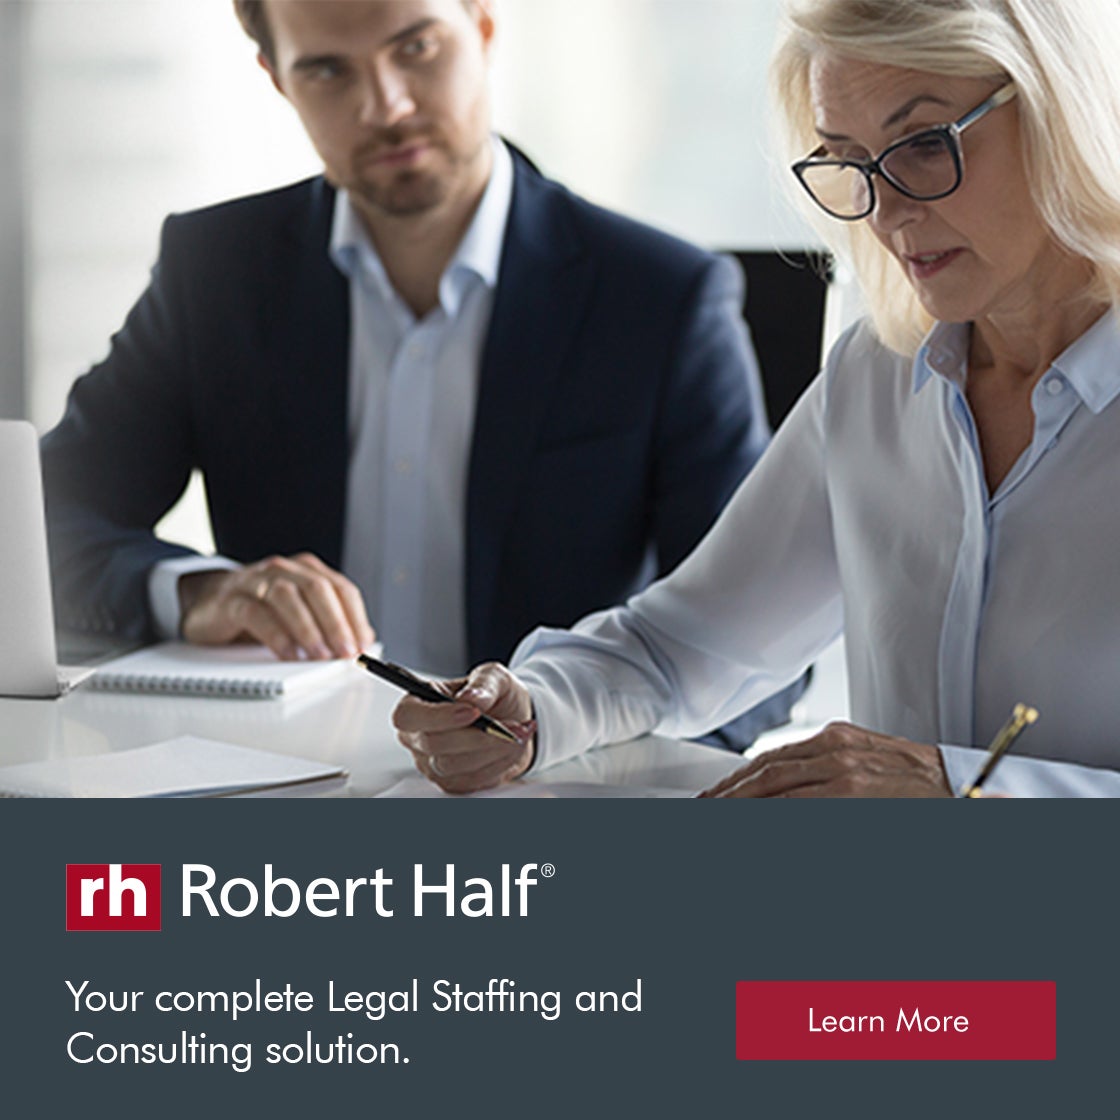 https://www.roberthalf.com/employers/legal